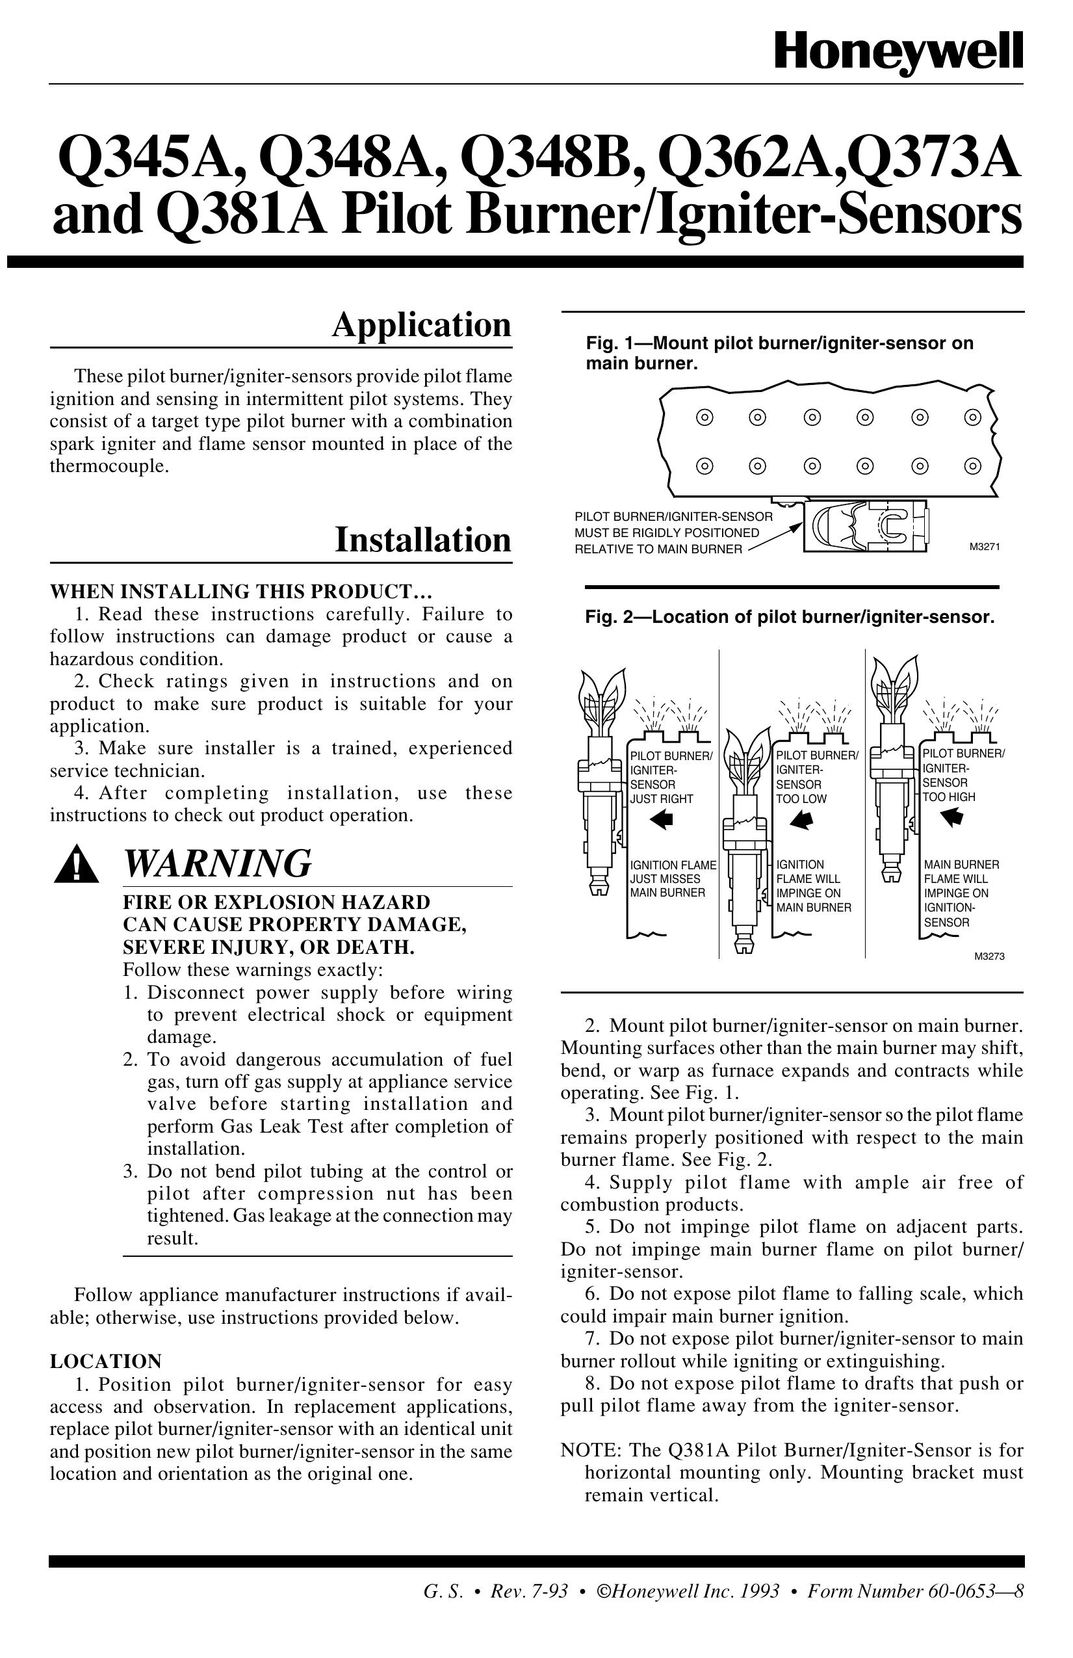 Honeywell Q362A Burner User Manual